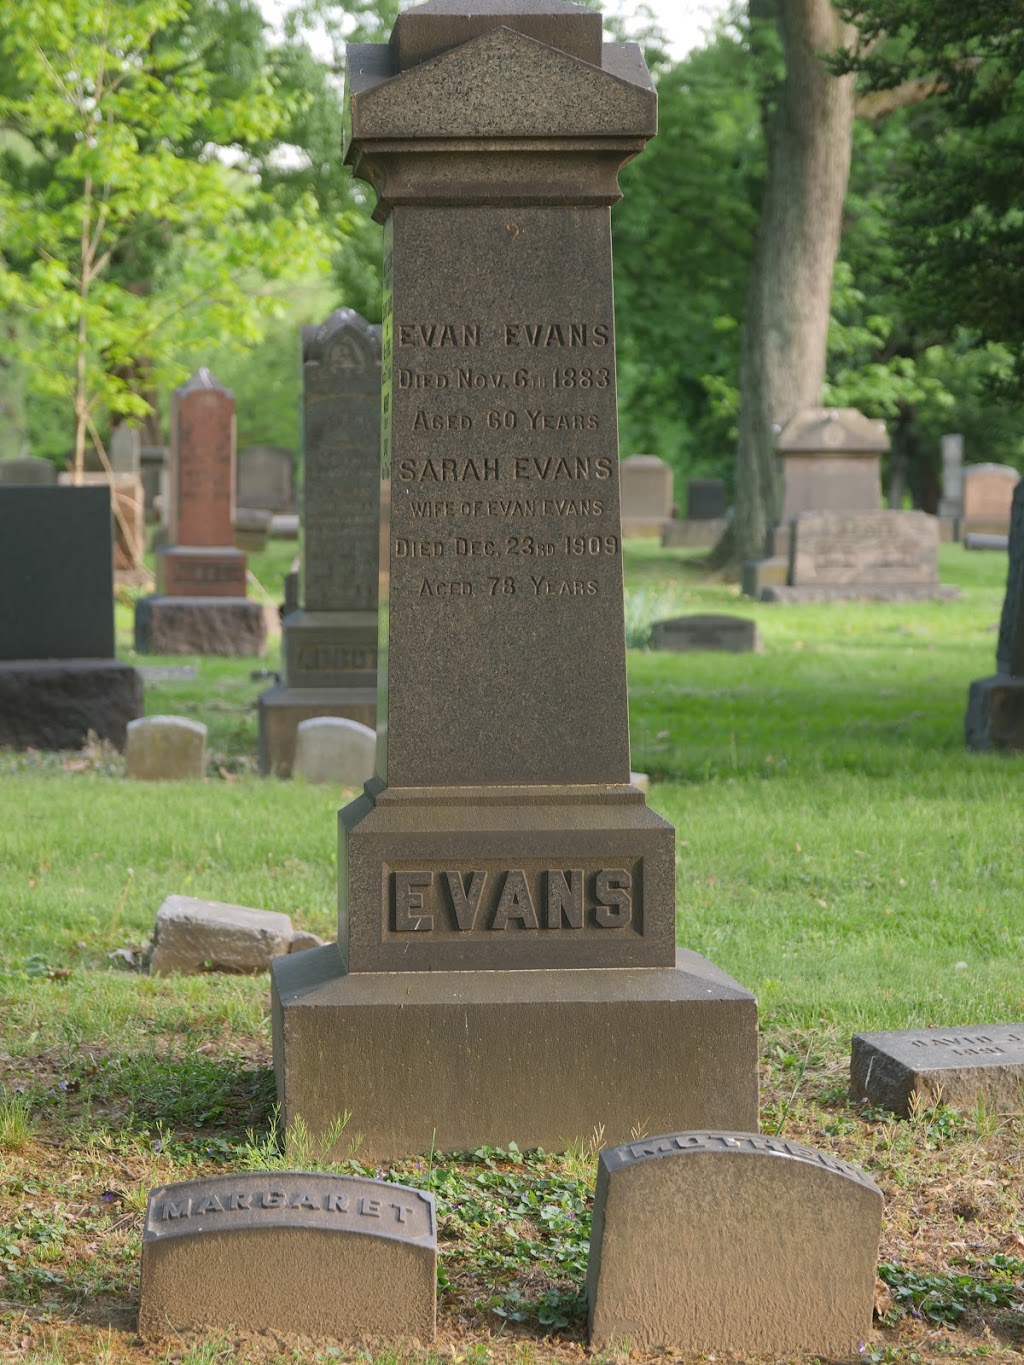 Harvard Grove Cemetery | 6100 Lansing Ave, Cleveland, OH 44105, USA | Phone: (216) 348-7216